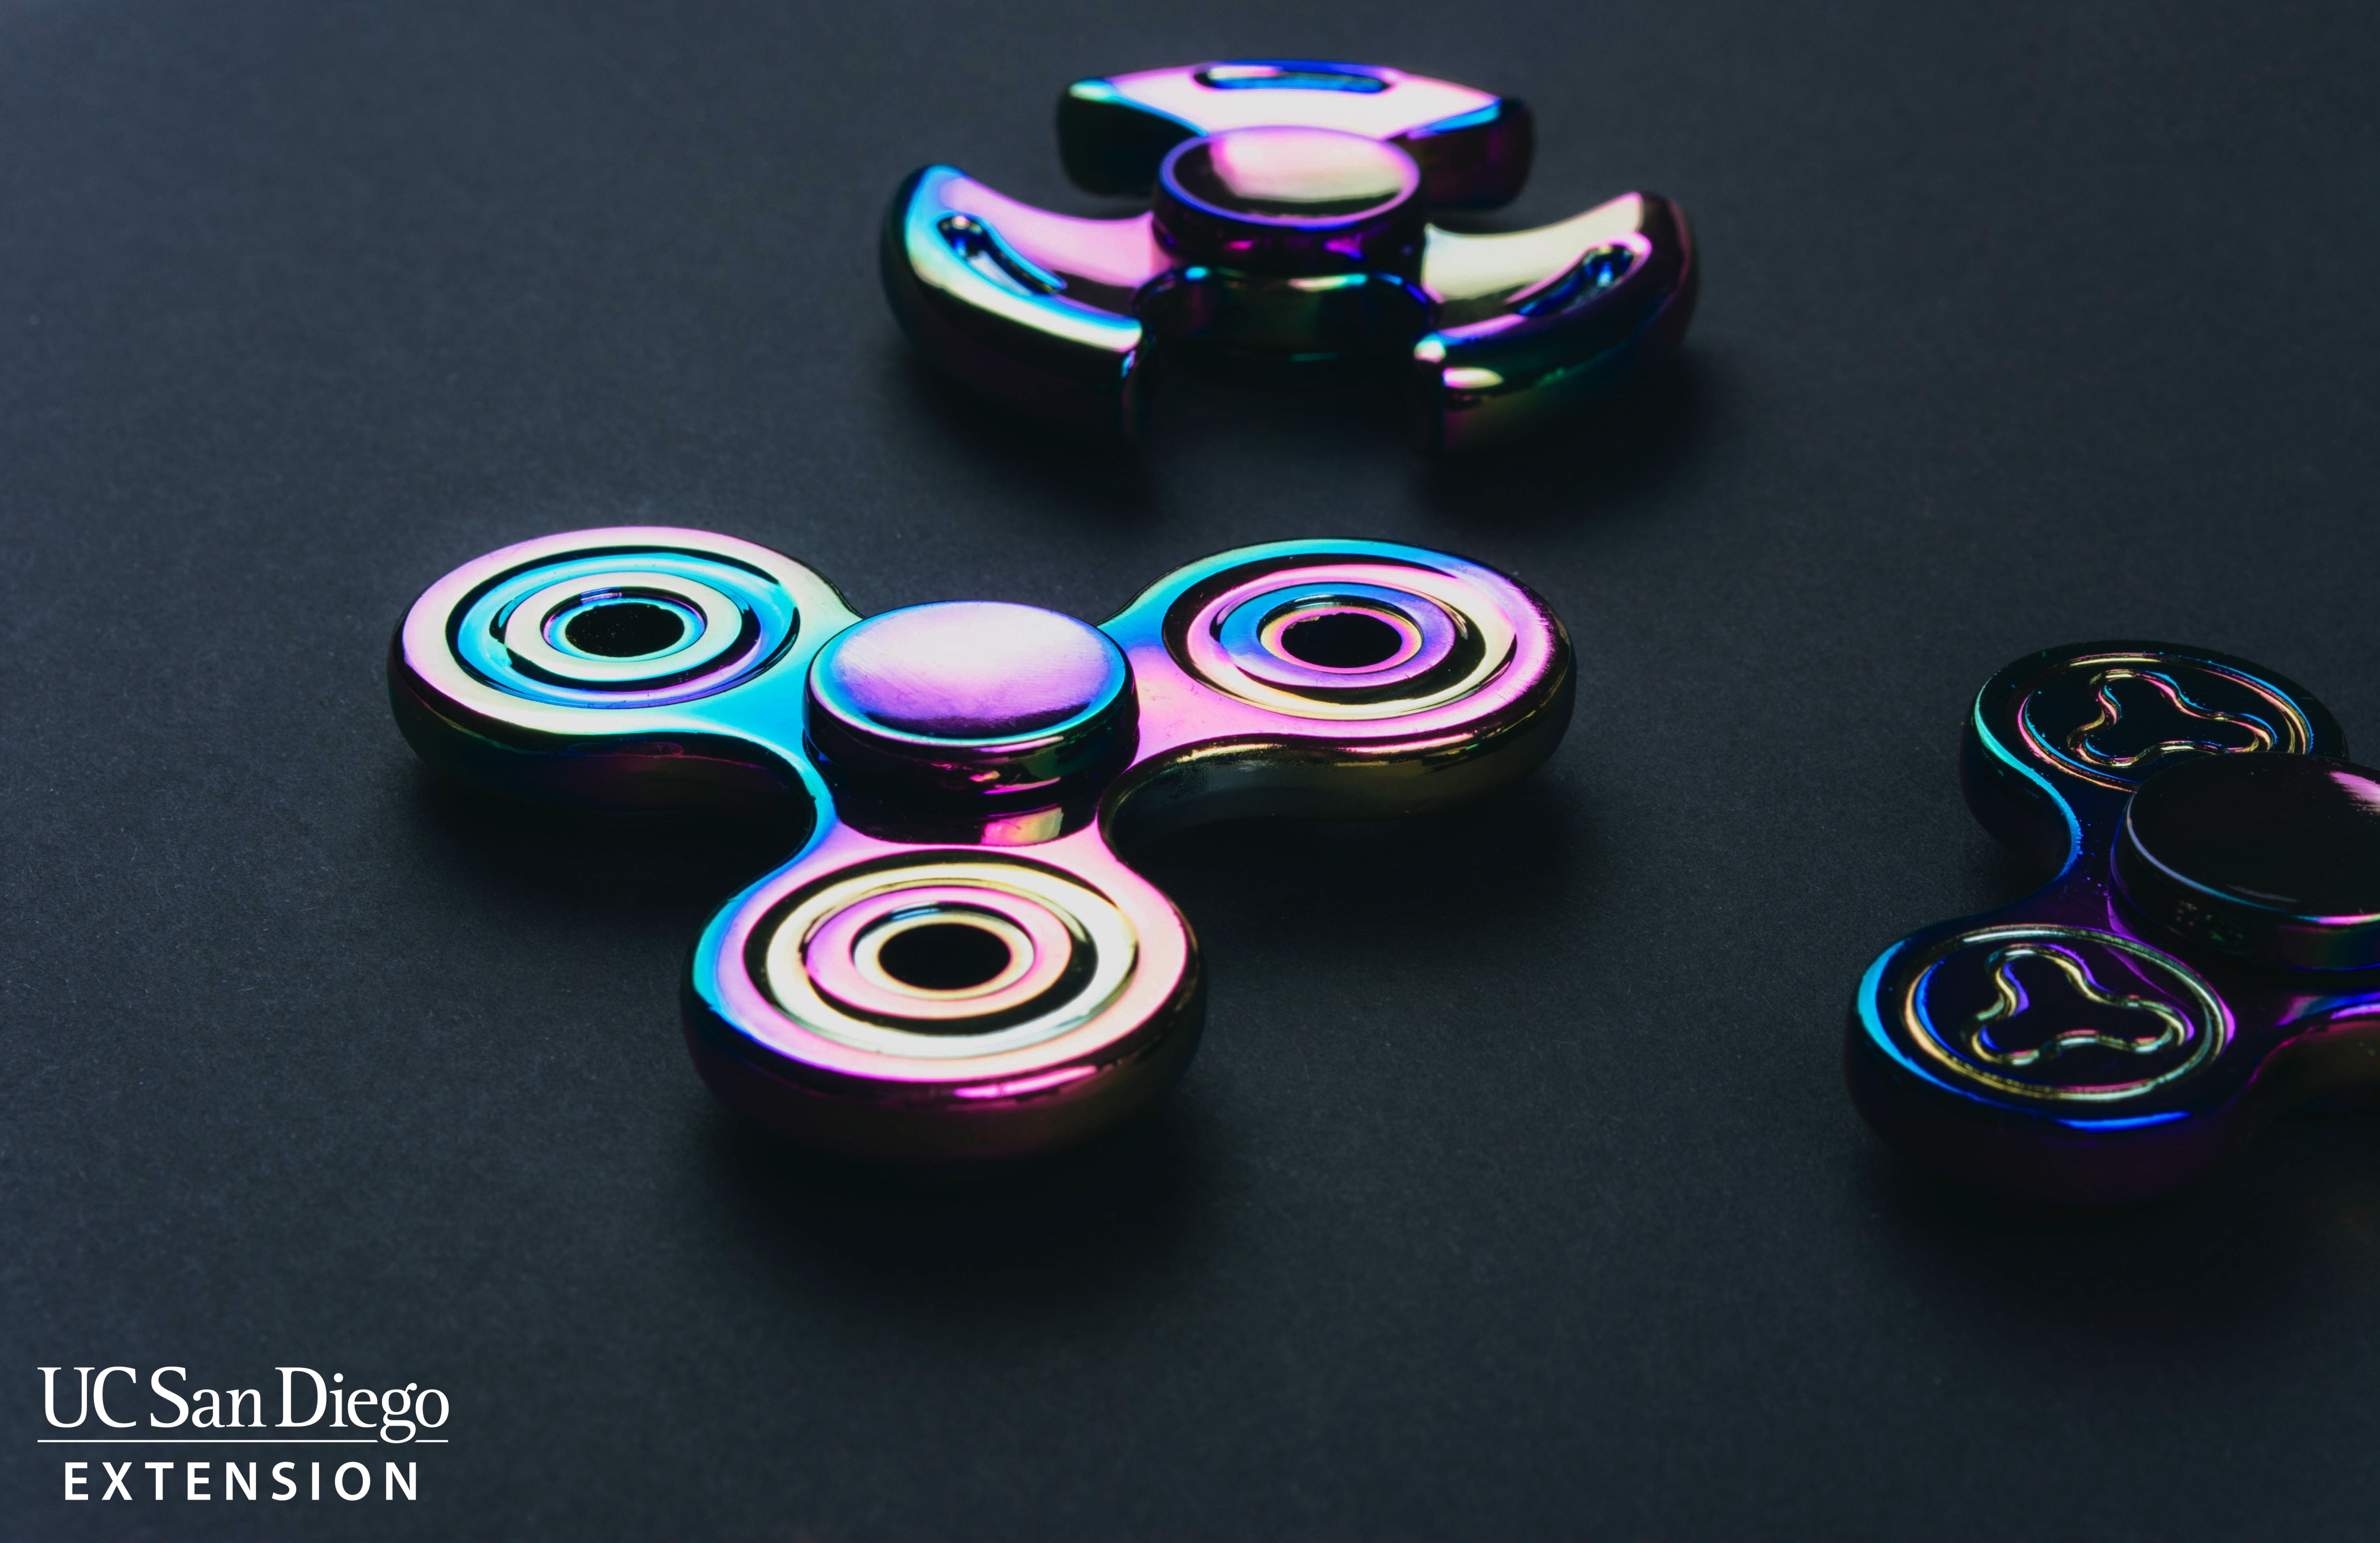 Shiny fidget spinners